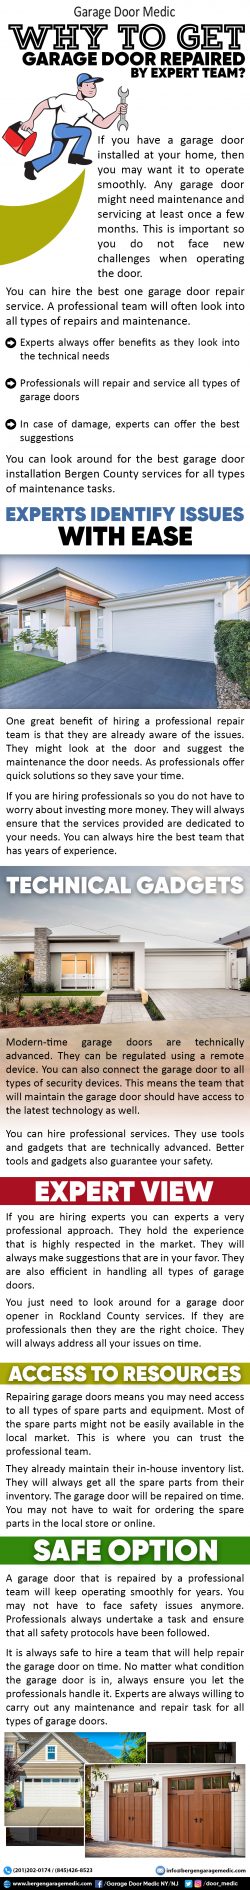 Why To Get Garage Door Repaired By Expert Team?